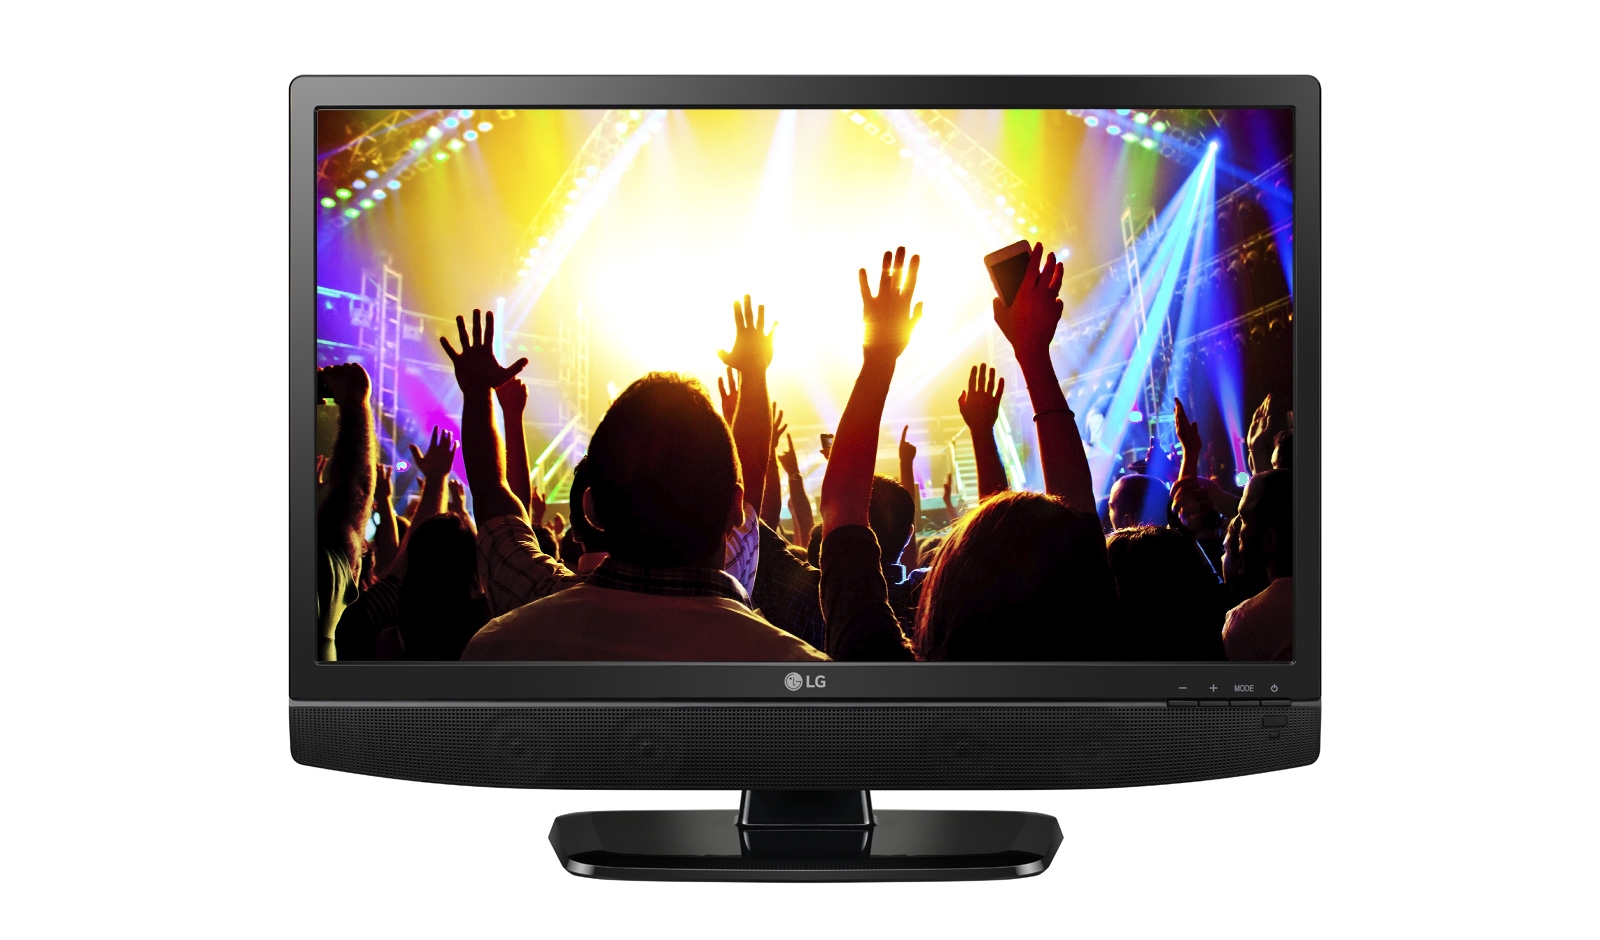 LG 24MT48AM-PT 24-Inch HD TV Monitor